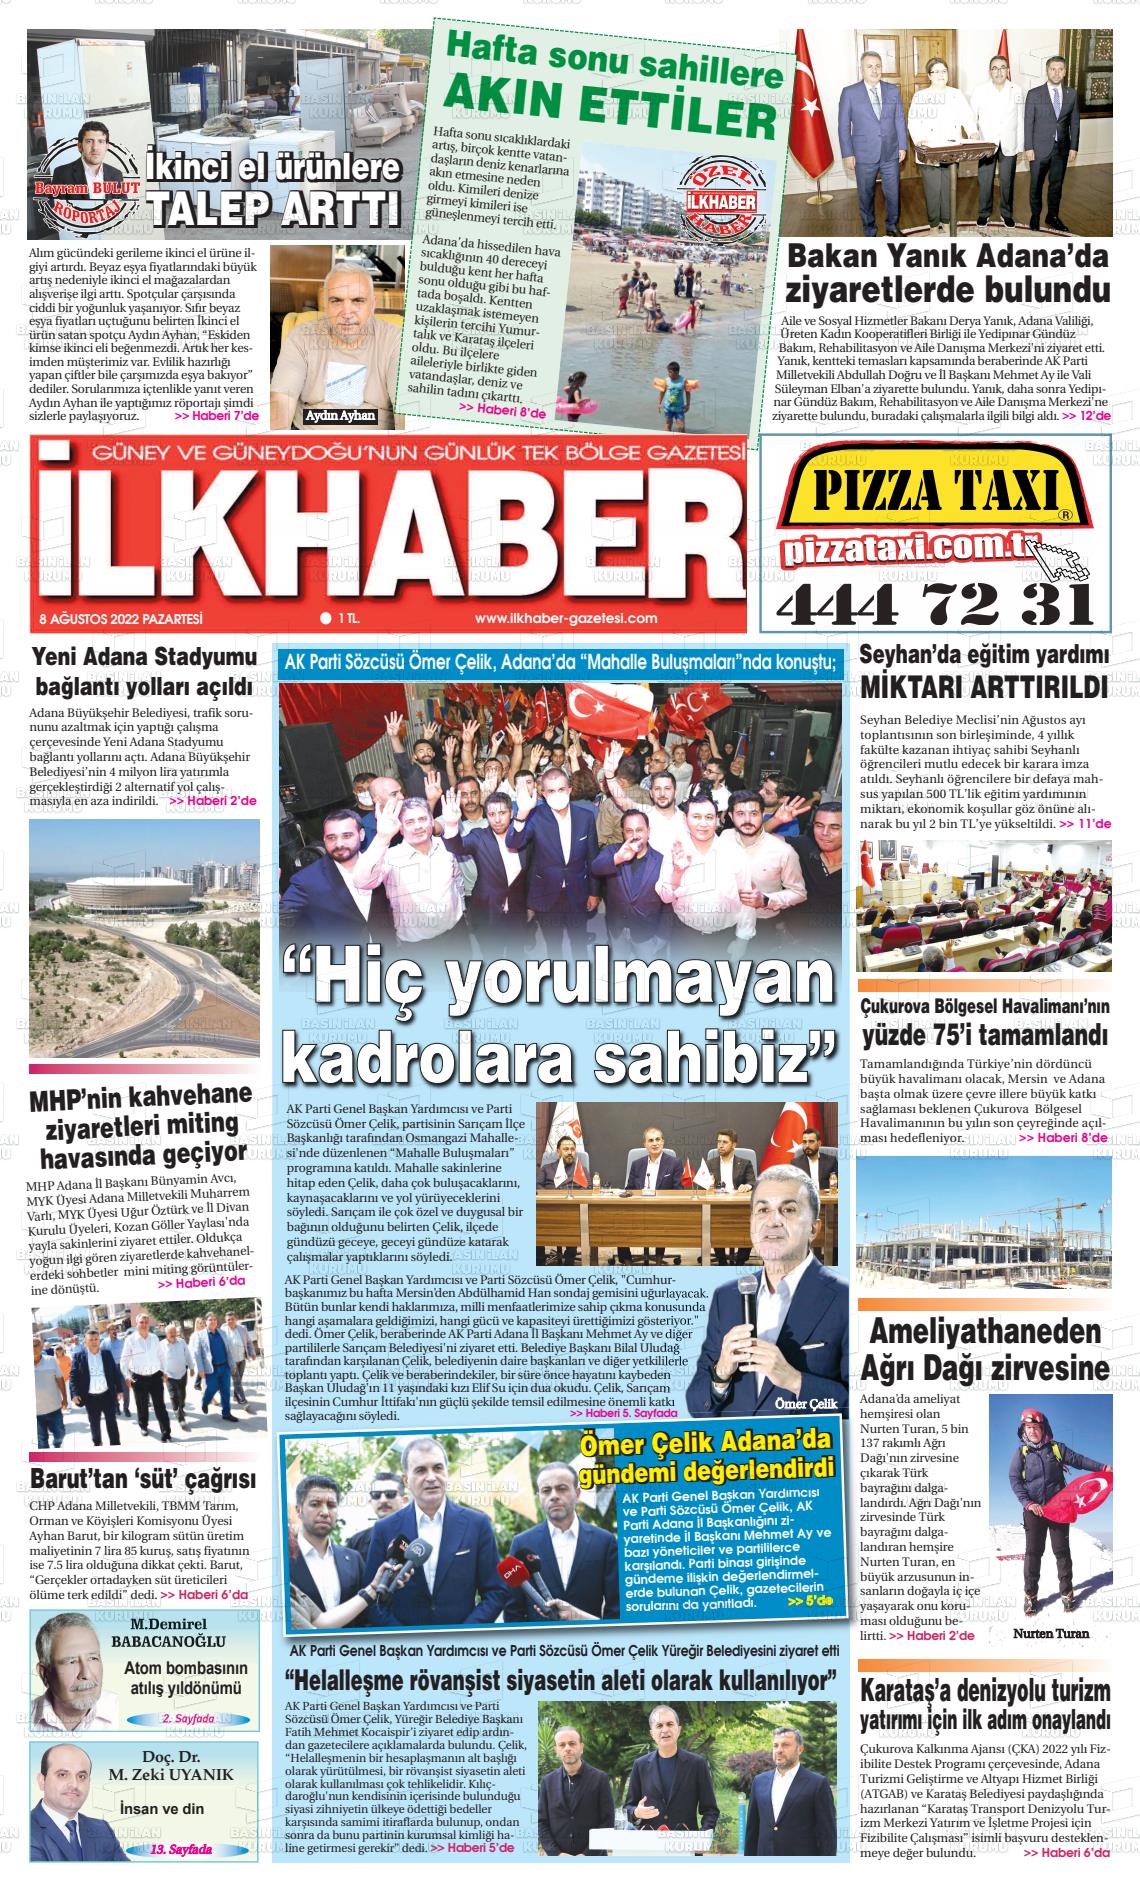 08 Ağustos 2022 İlk Haber Gazete Manşeti